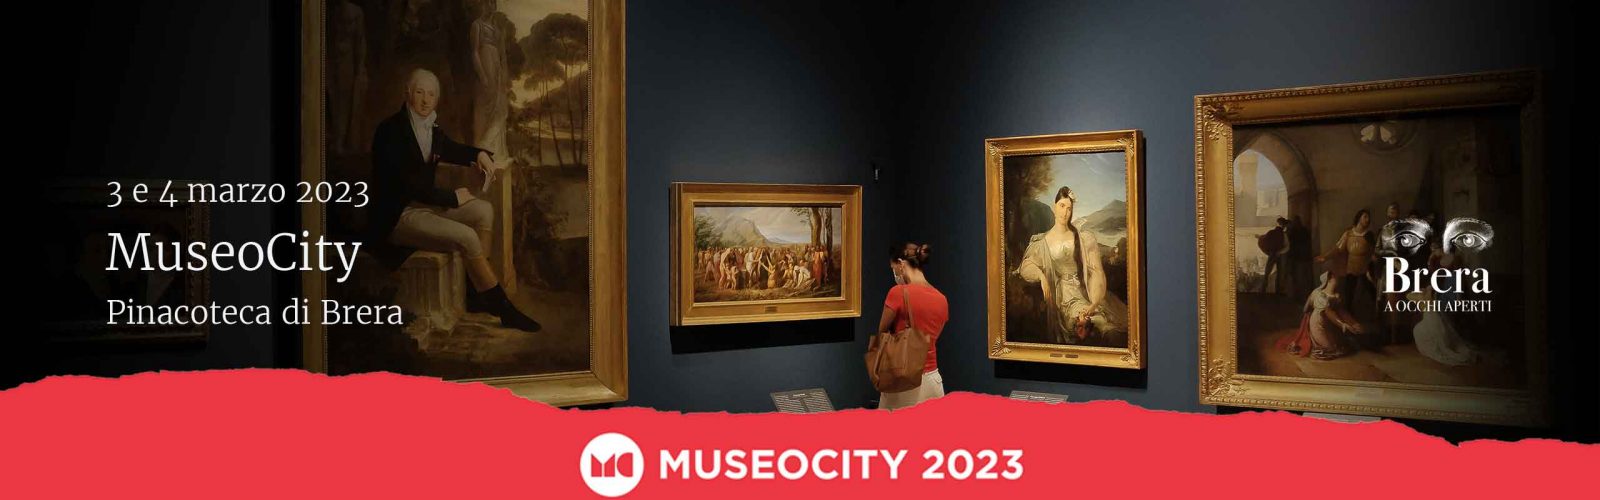 MuseoCity 2023 alla Pinacoteca di Brera